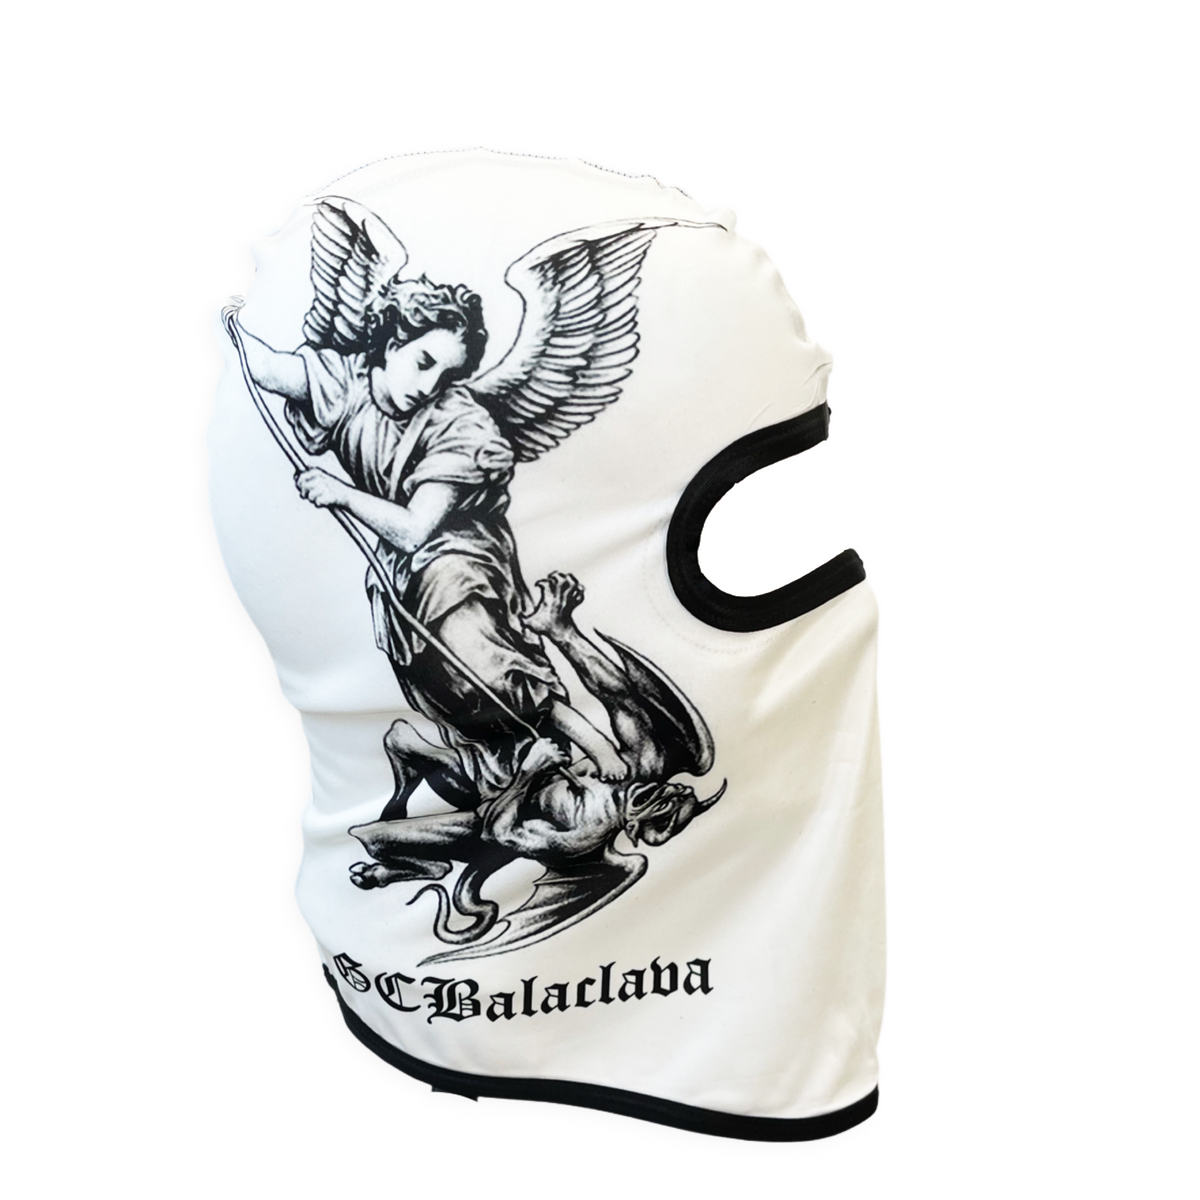 Archangel Michael Slaying Demon Full Graphic Balaclava Ski mask - GCBalaclavas